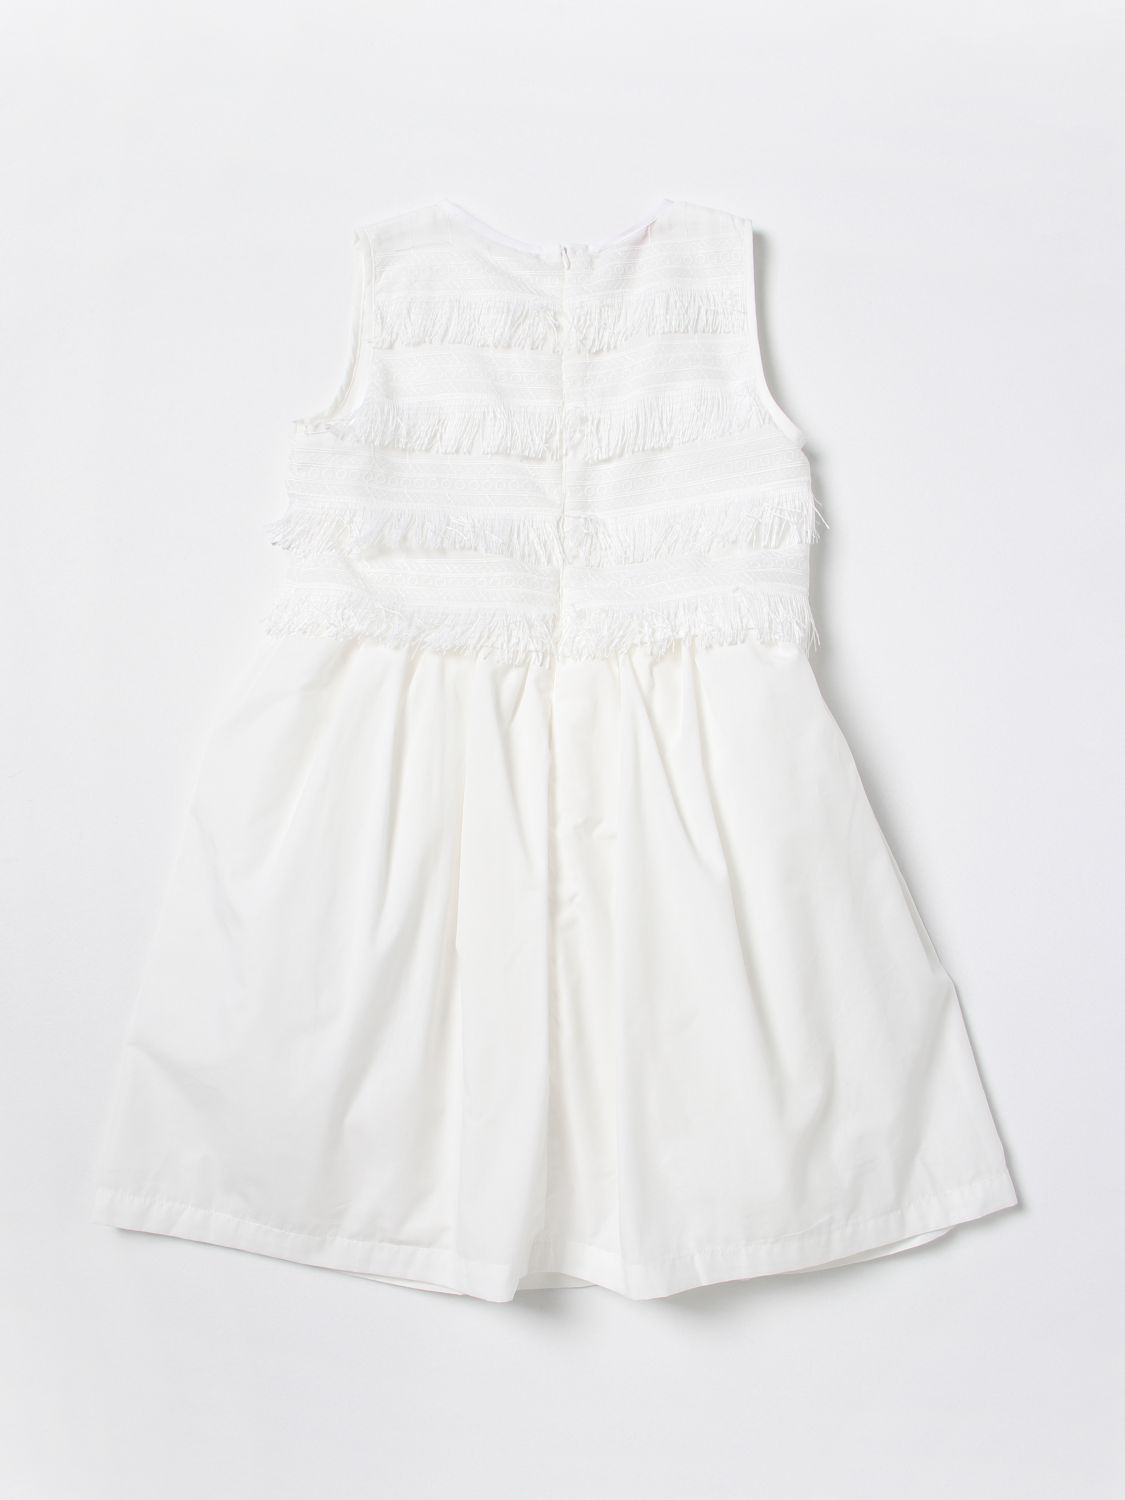 LIU JO KIDS: dress for girls - White | Liu Jo Kids dress GA3232T3358 ...